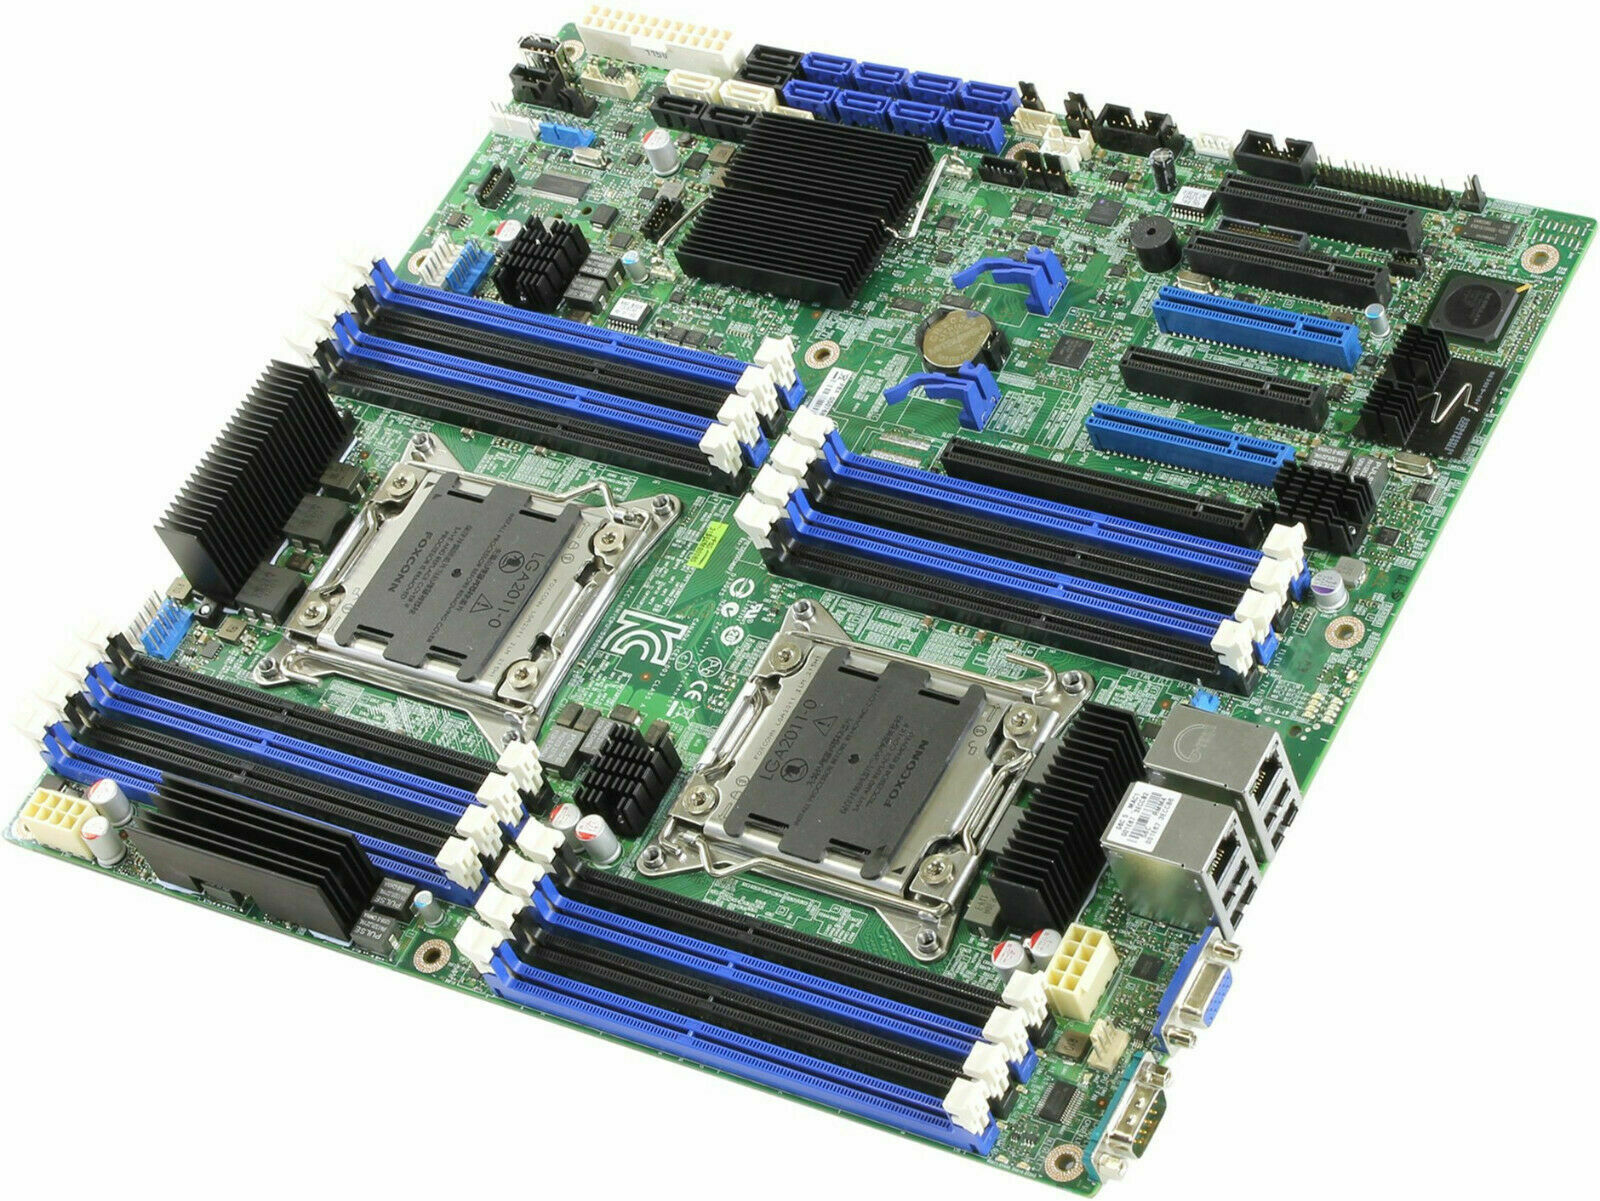 Intel S2400SC2 SSI CEB Socket LGA1356 2 Processors supported C602-A  2 x Gigabit LAN onboard graphics (PBA# G18552-403 / 404) Server Motherboard - DBS2400SC2